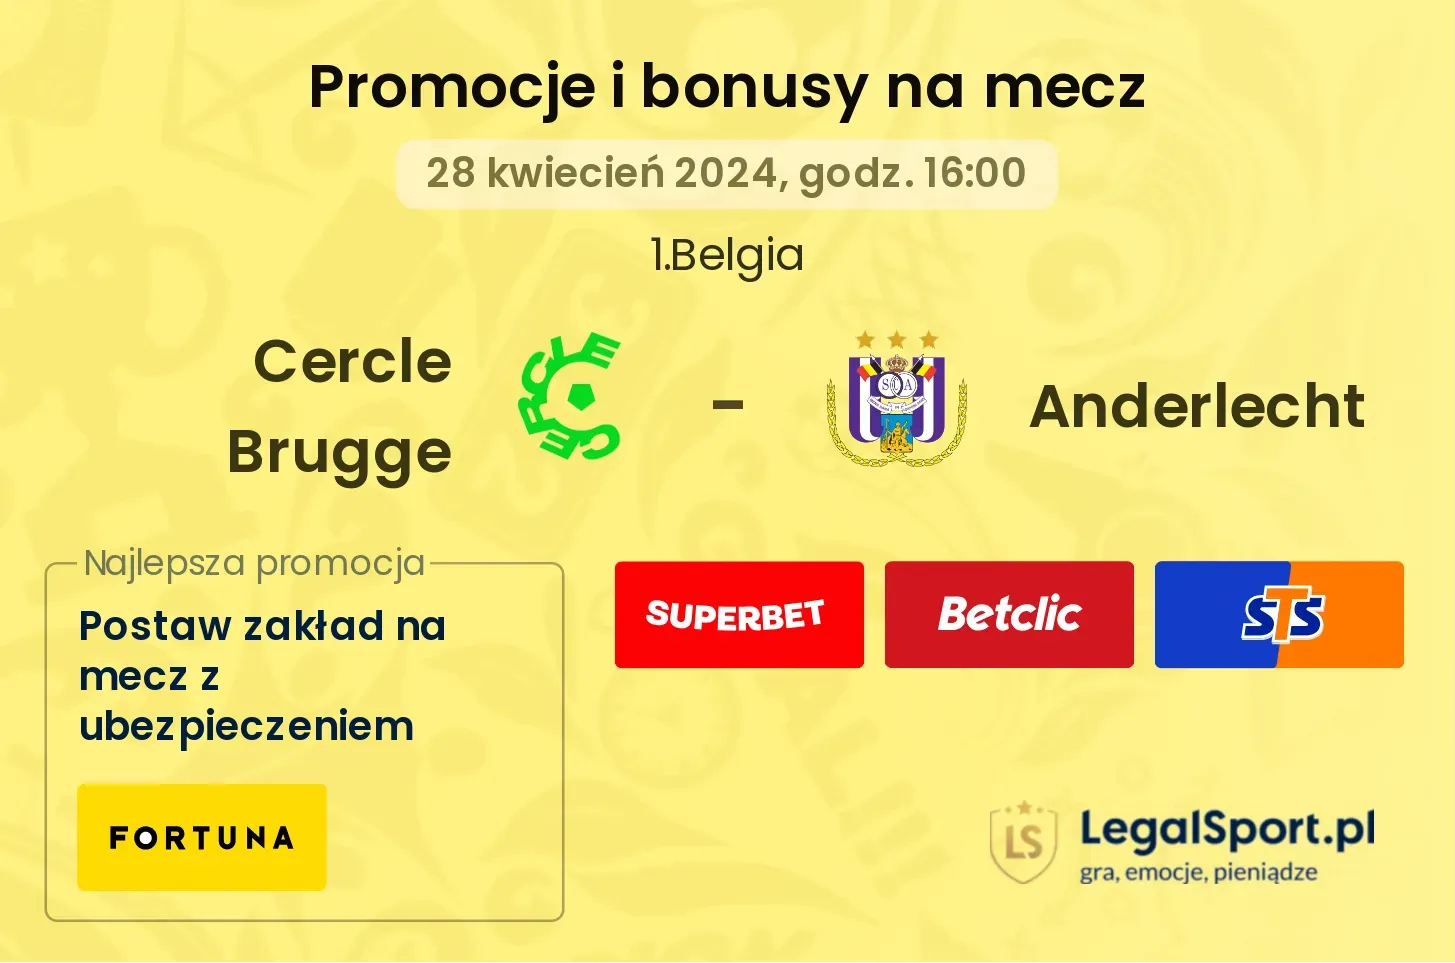 Cercle Brugge - Anderlecht promocje bonusy na mecz